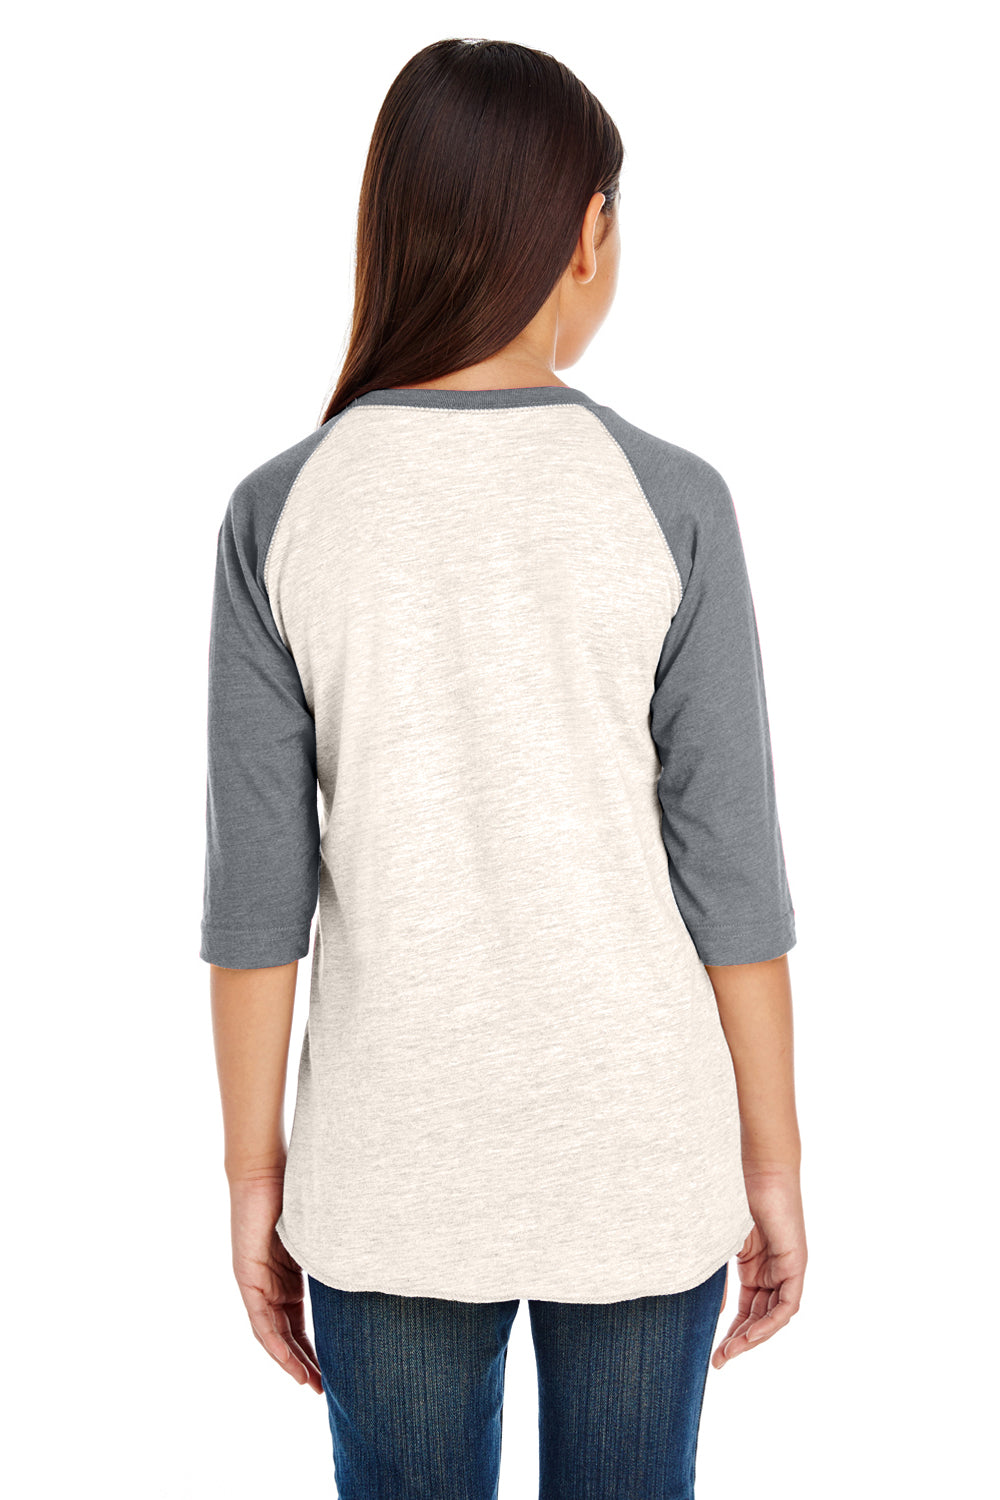 LAT 6130 Fine Jersey 3/4 Sleeve Crewneck T-Shirt Heather Natural/Granite Grey Back